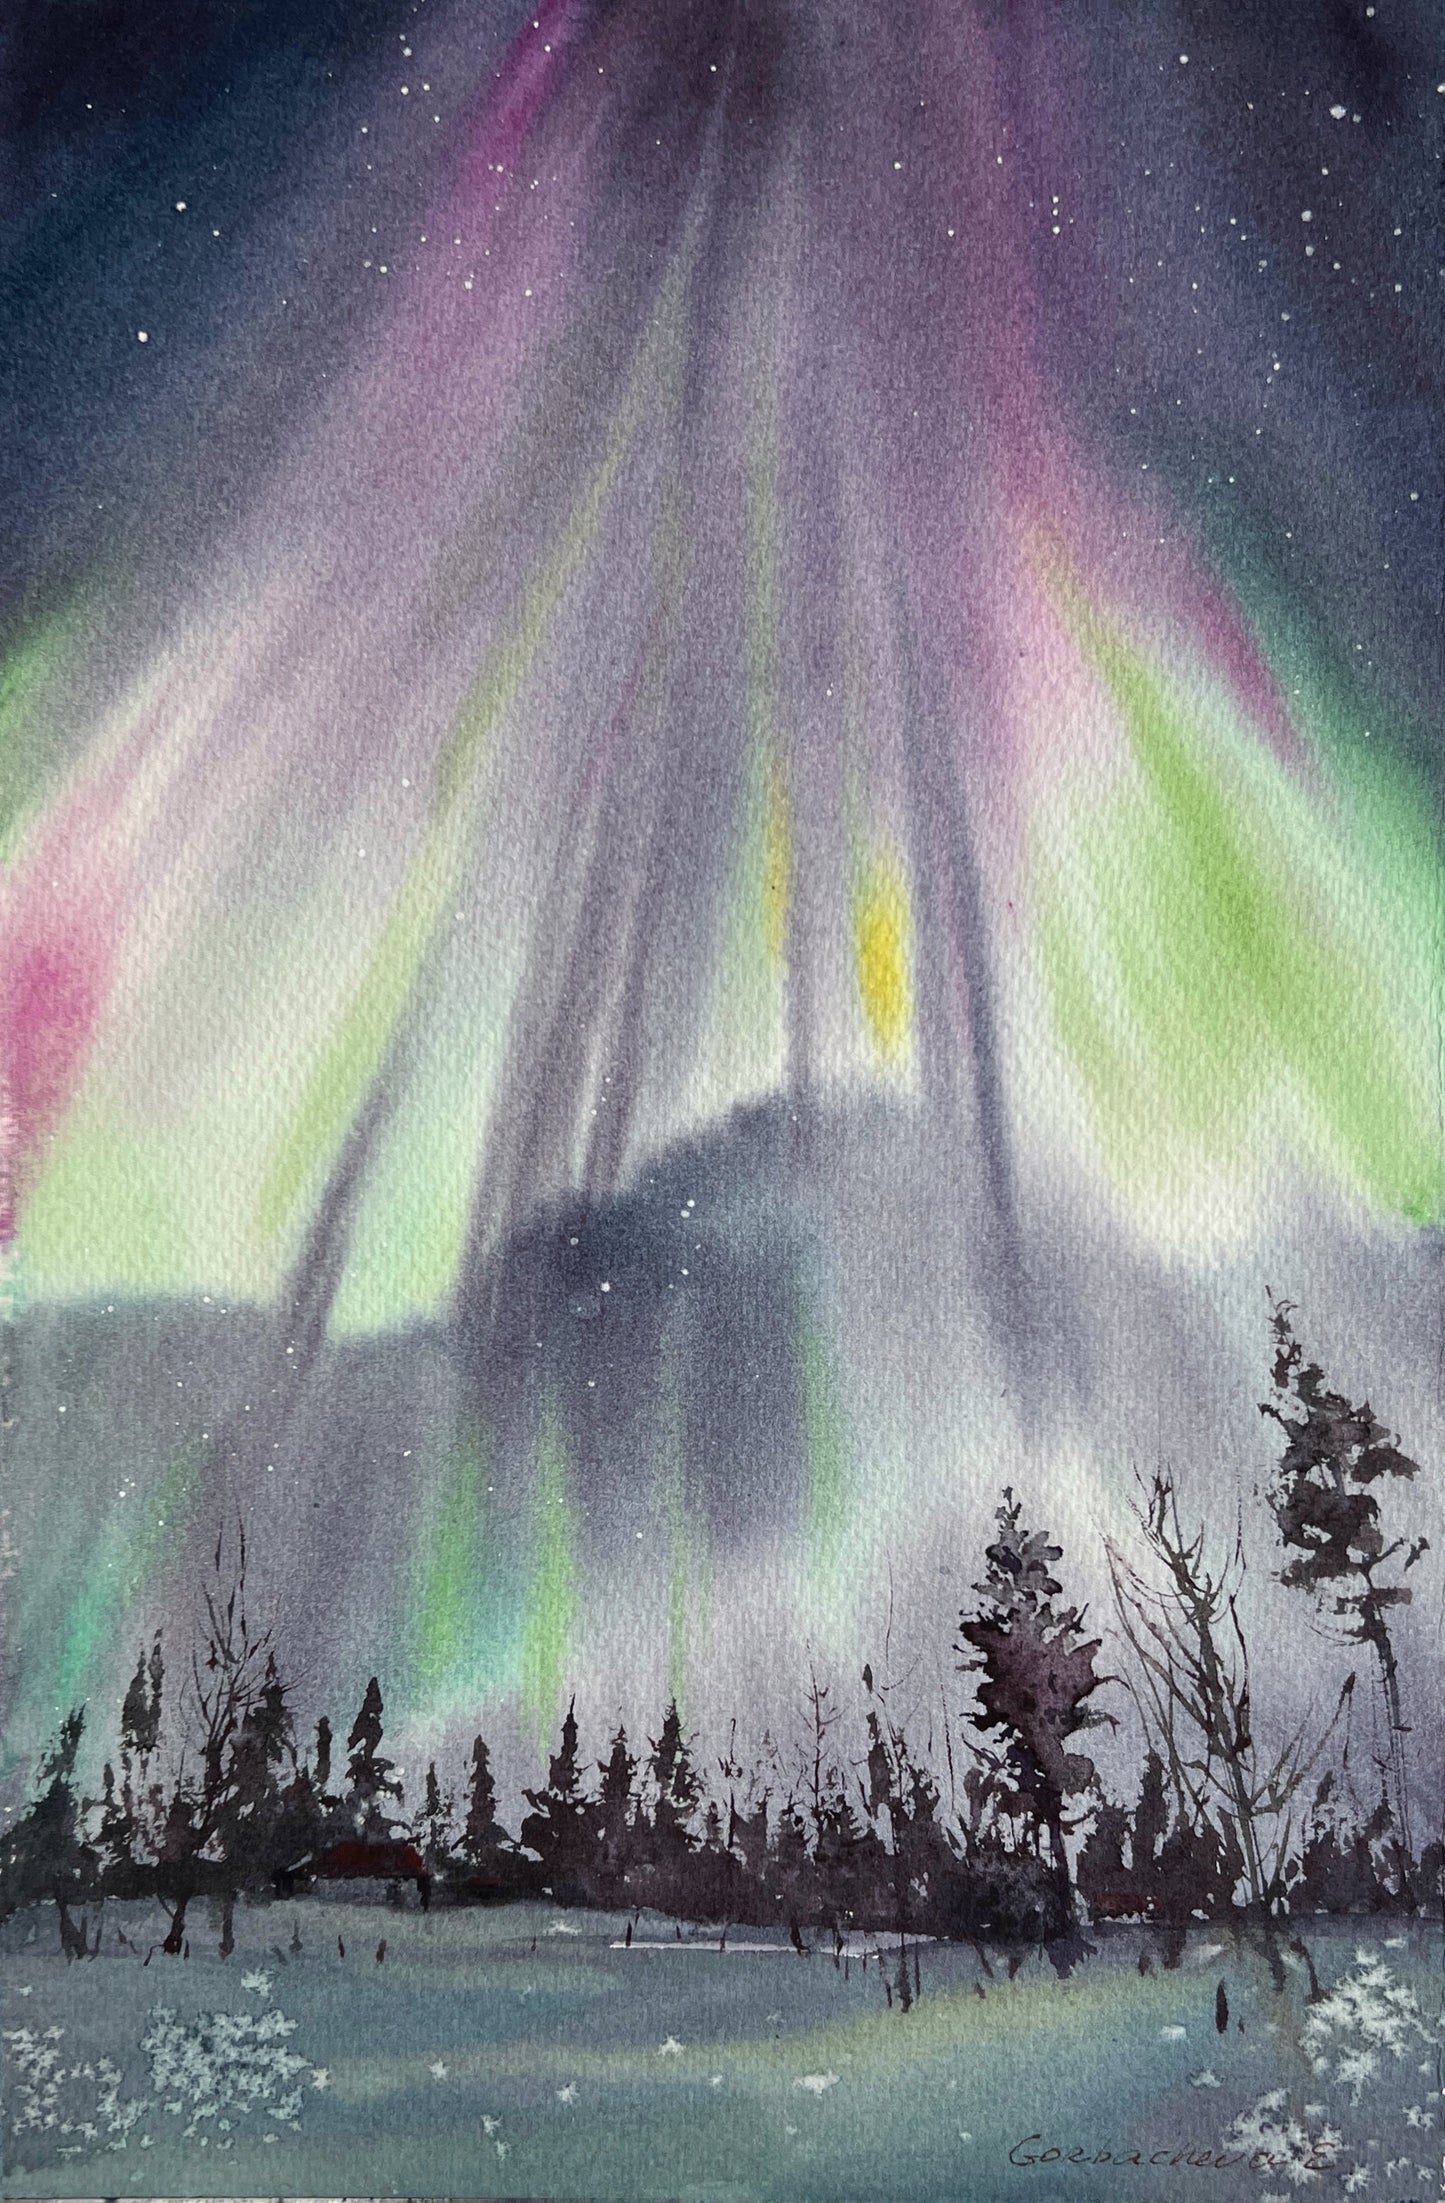 Small Painting Aurora Borealis, Christmas Gift, Original Watercolor, Night Sky Artwork, Winter Landscape, Northern lights